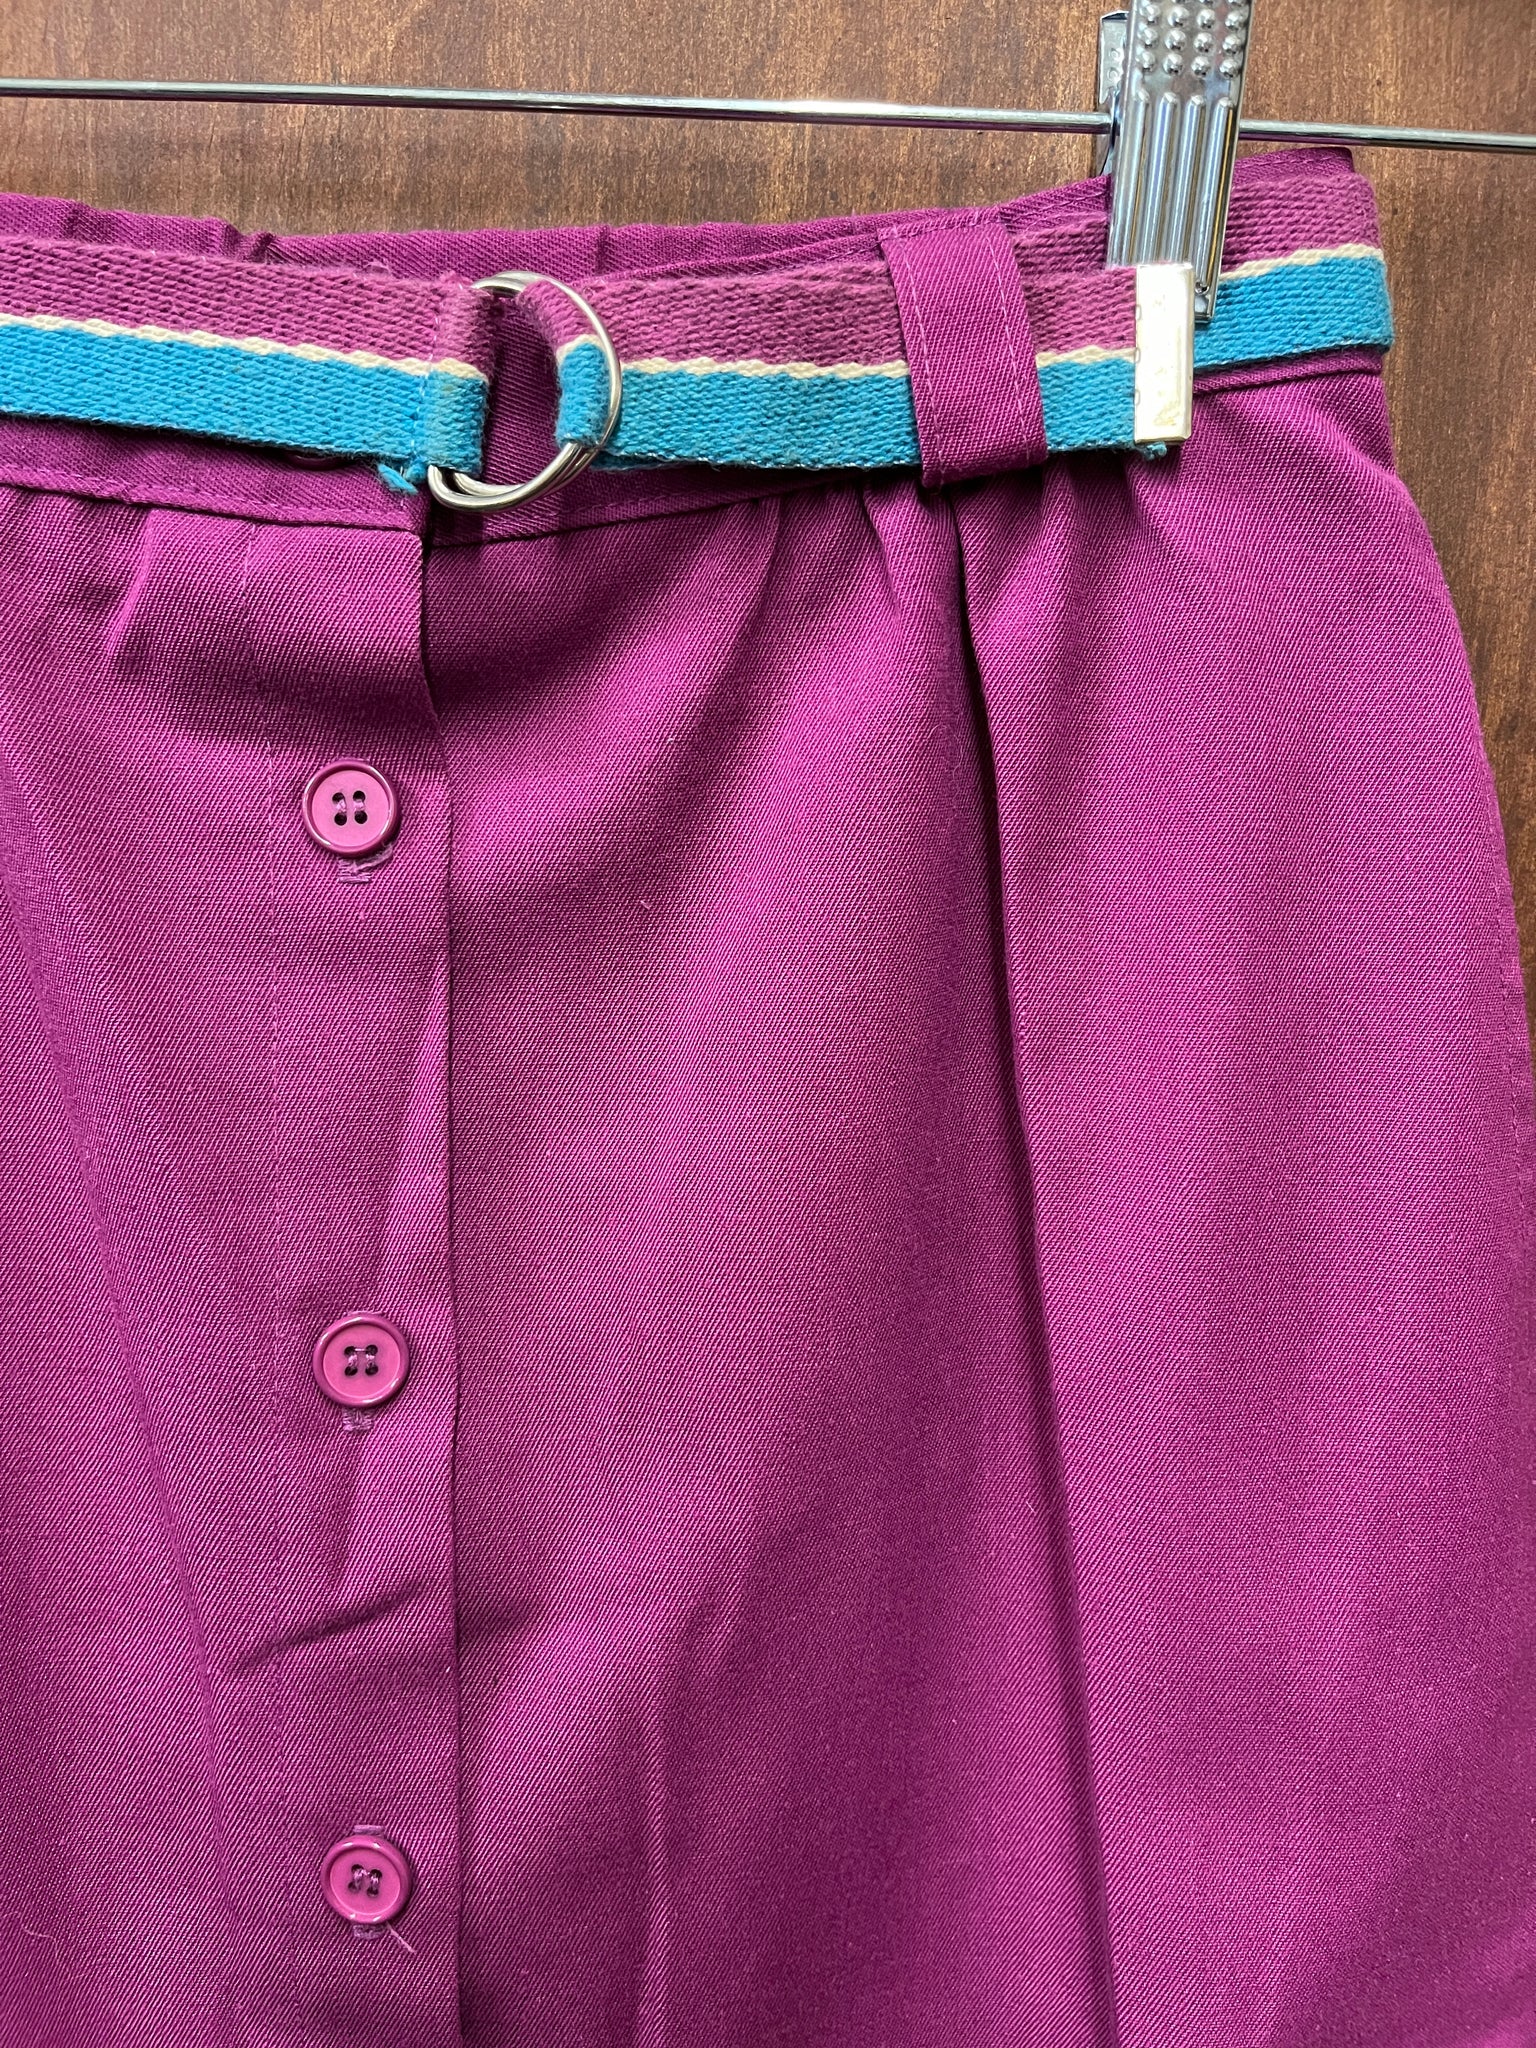 1980s SKIRTS- Purple button front straight skirt w/ belt